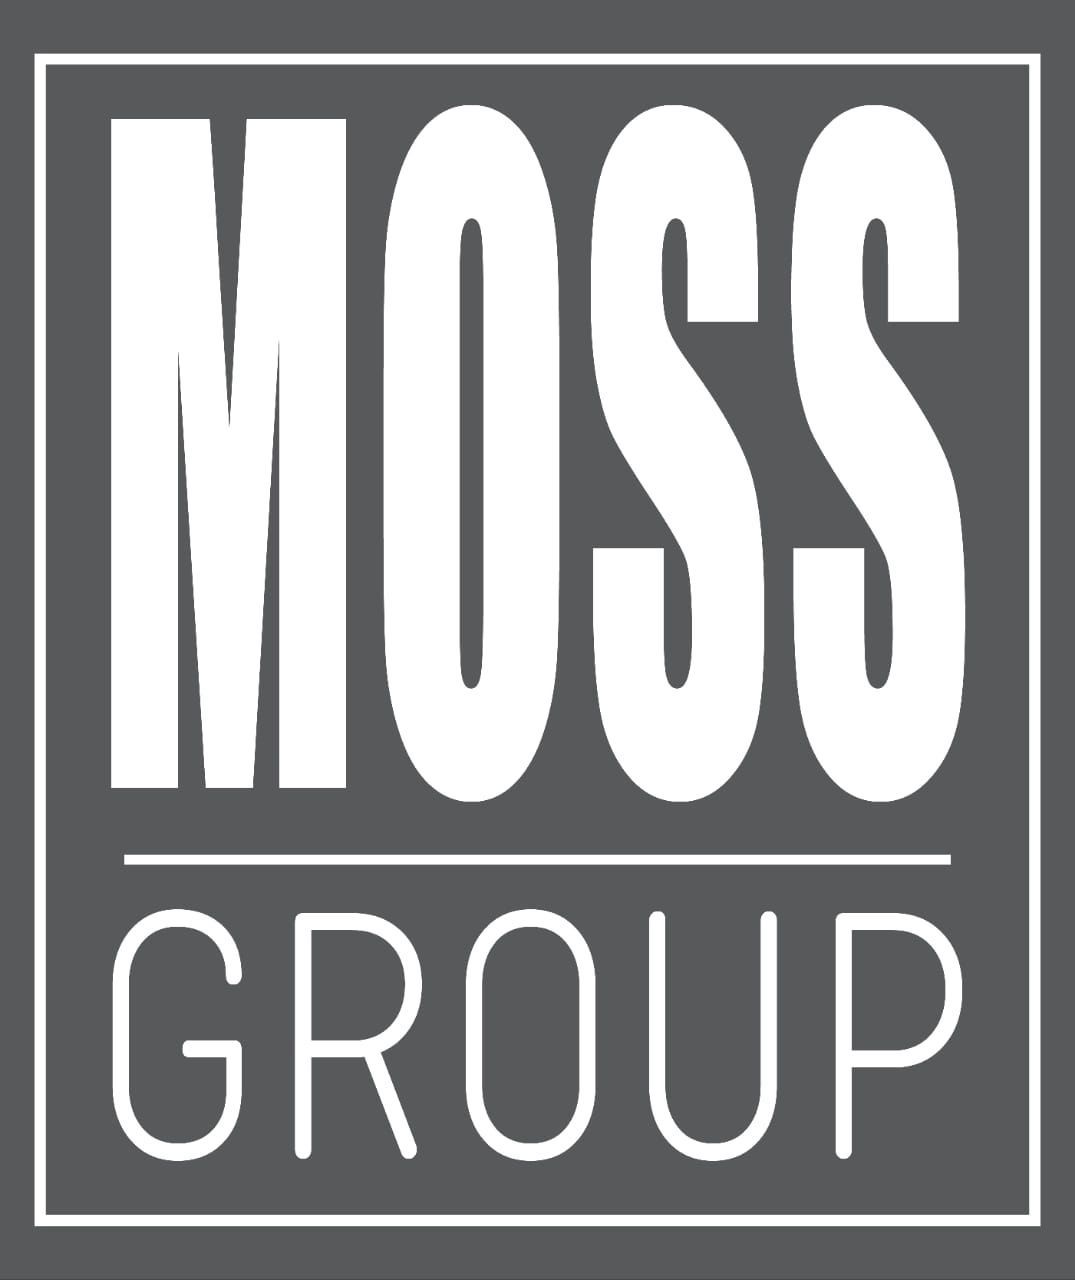 Moss Group logo